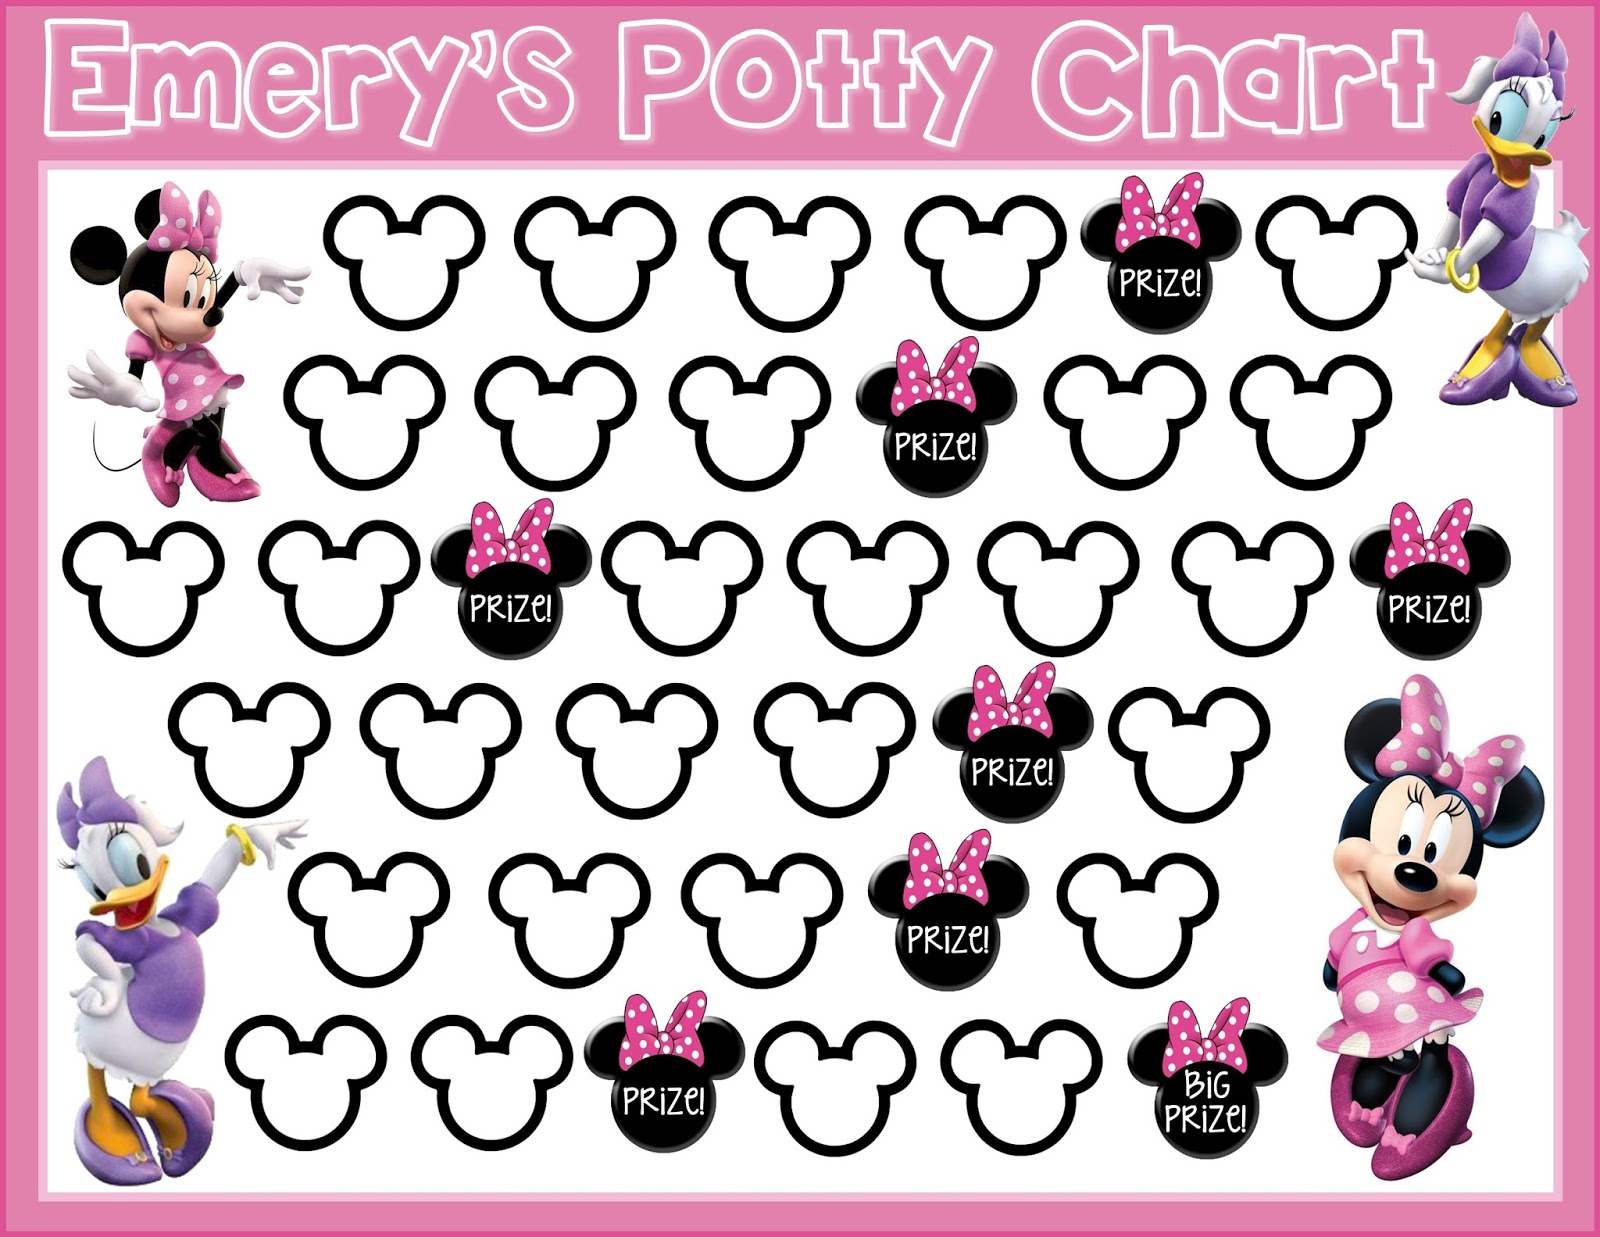 Free Printable Potty Chart Minnie Mouse